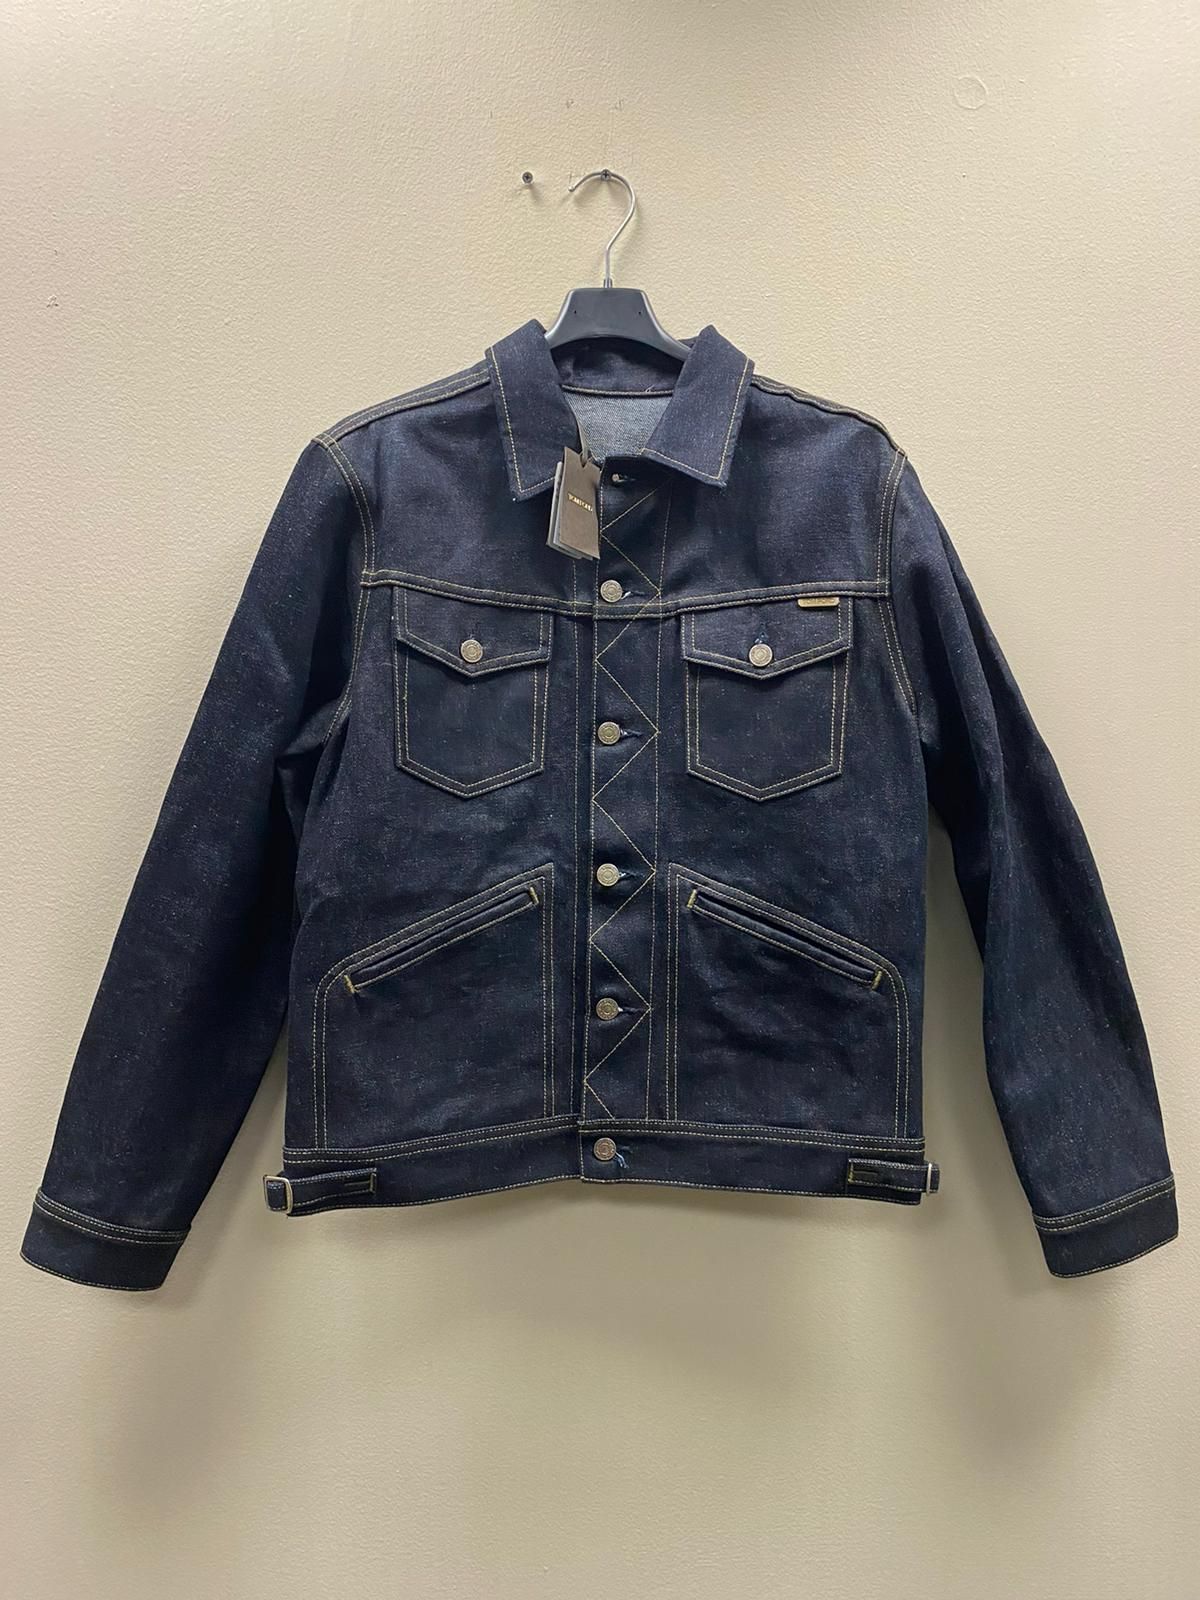 Tom Ford Classic Denim Jacket in Indigo Size US M / EU 48-50 / 2 - 1 Preview